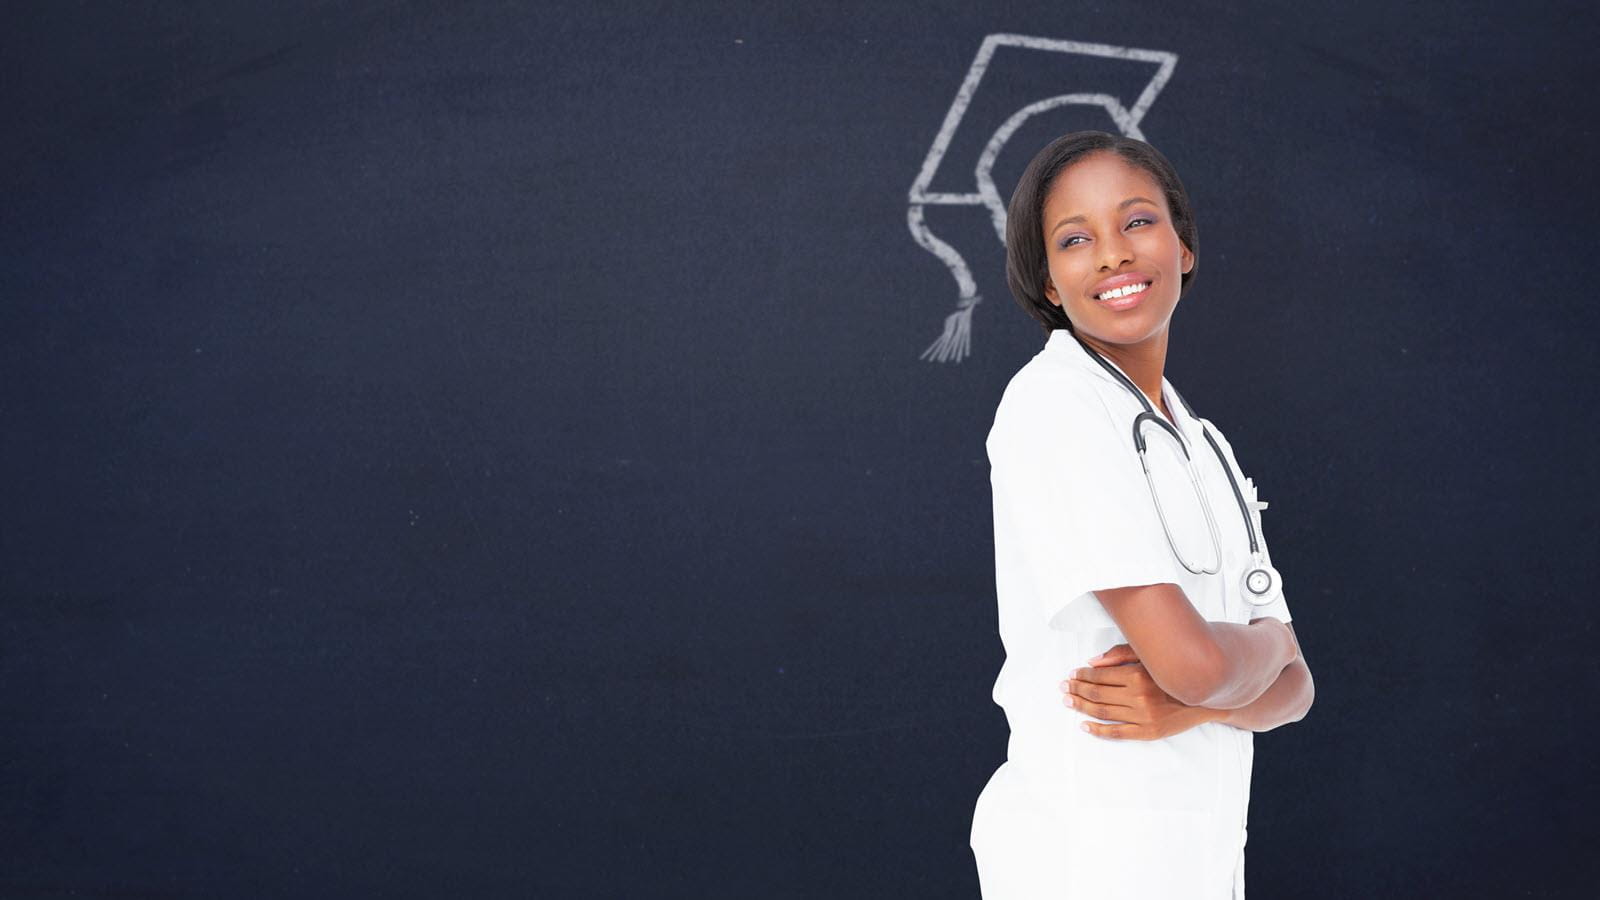 A photo illustration of a nurse graduating